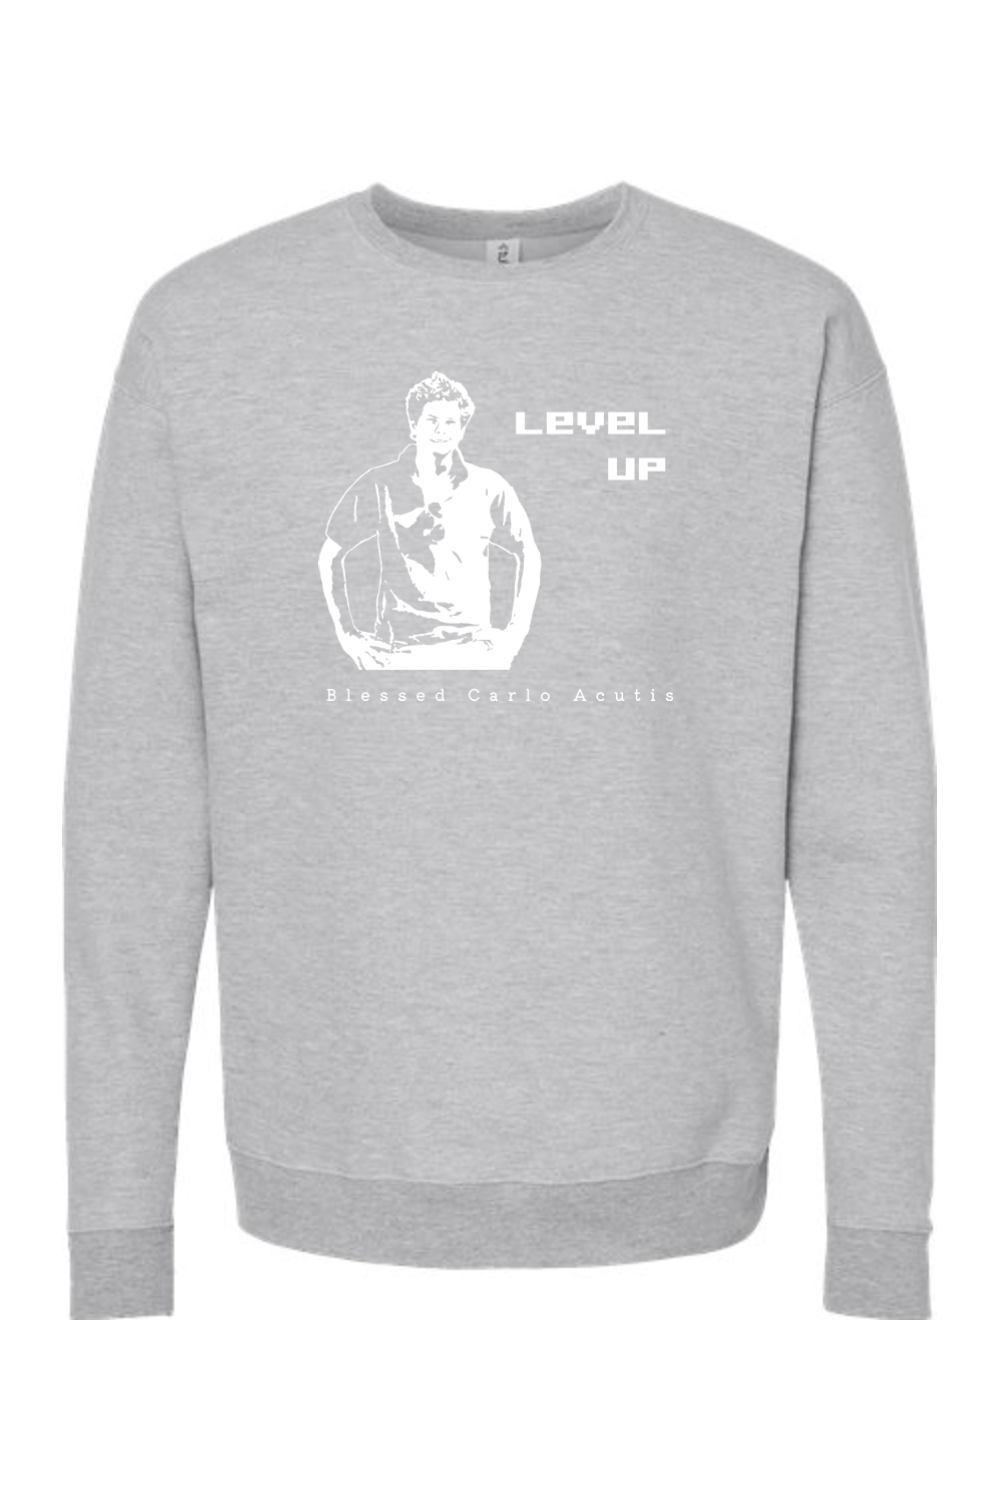 Level Up - Bl. Carlo Acutis Crewneck Sweatshirt